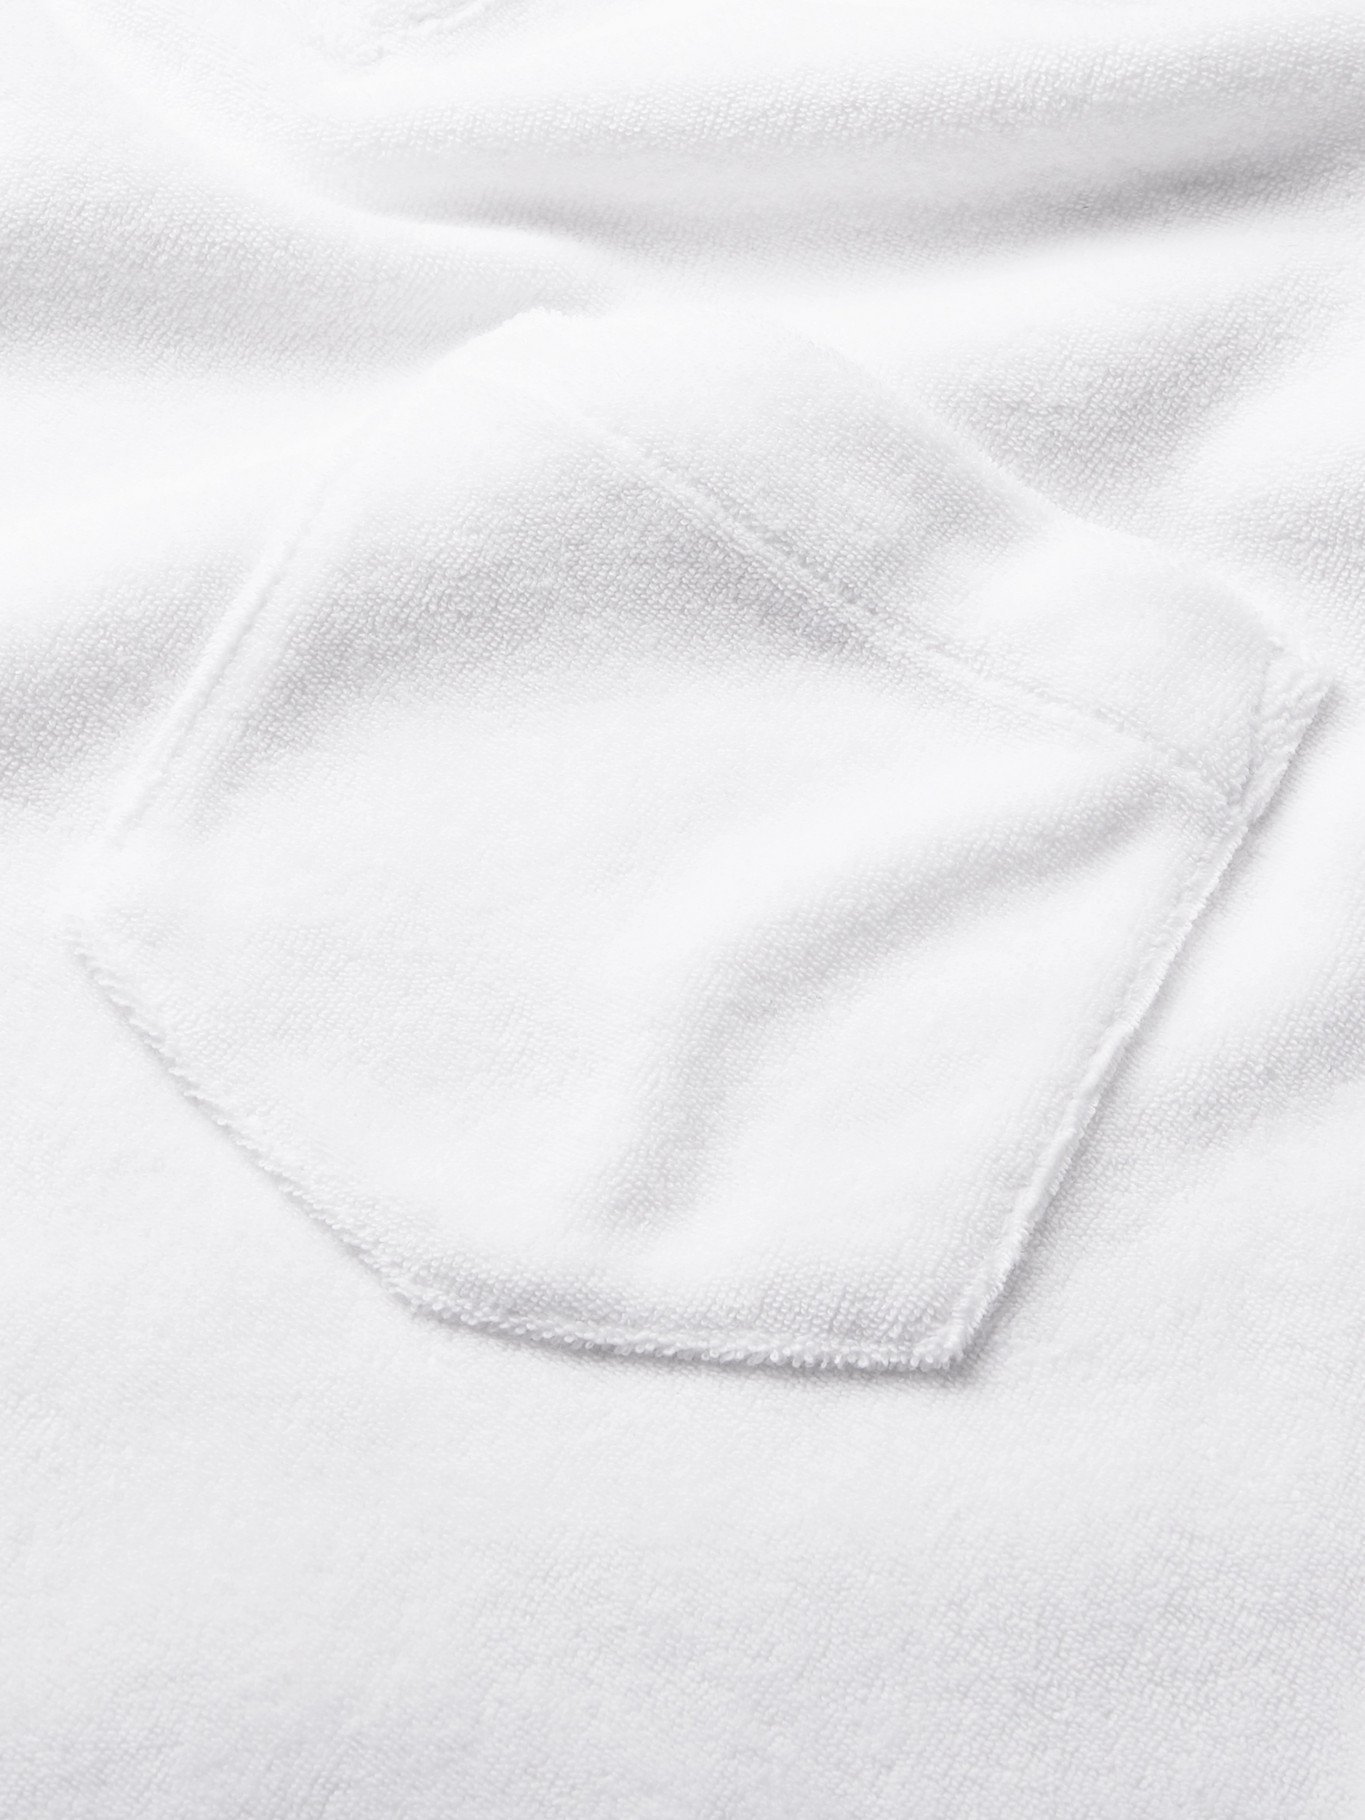 POLO RALPH LAUREN - Cotton-Blend Terry Polo Shirt - White Polo Ralph Lauren